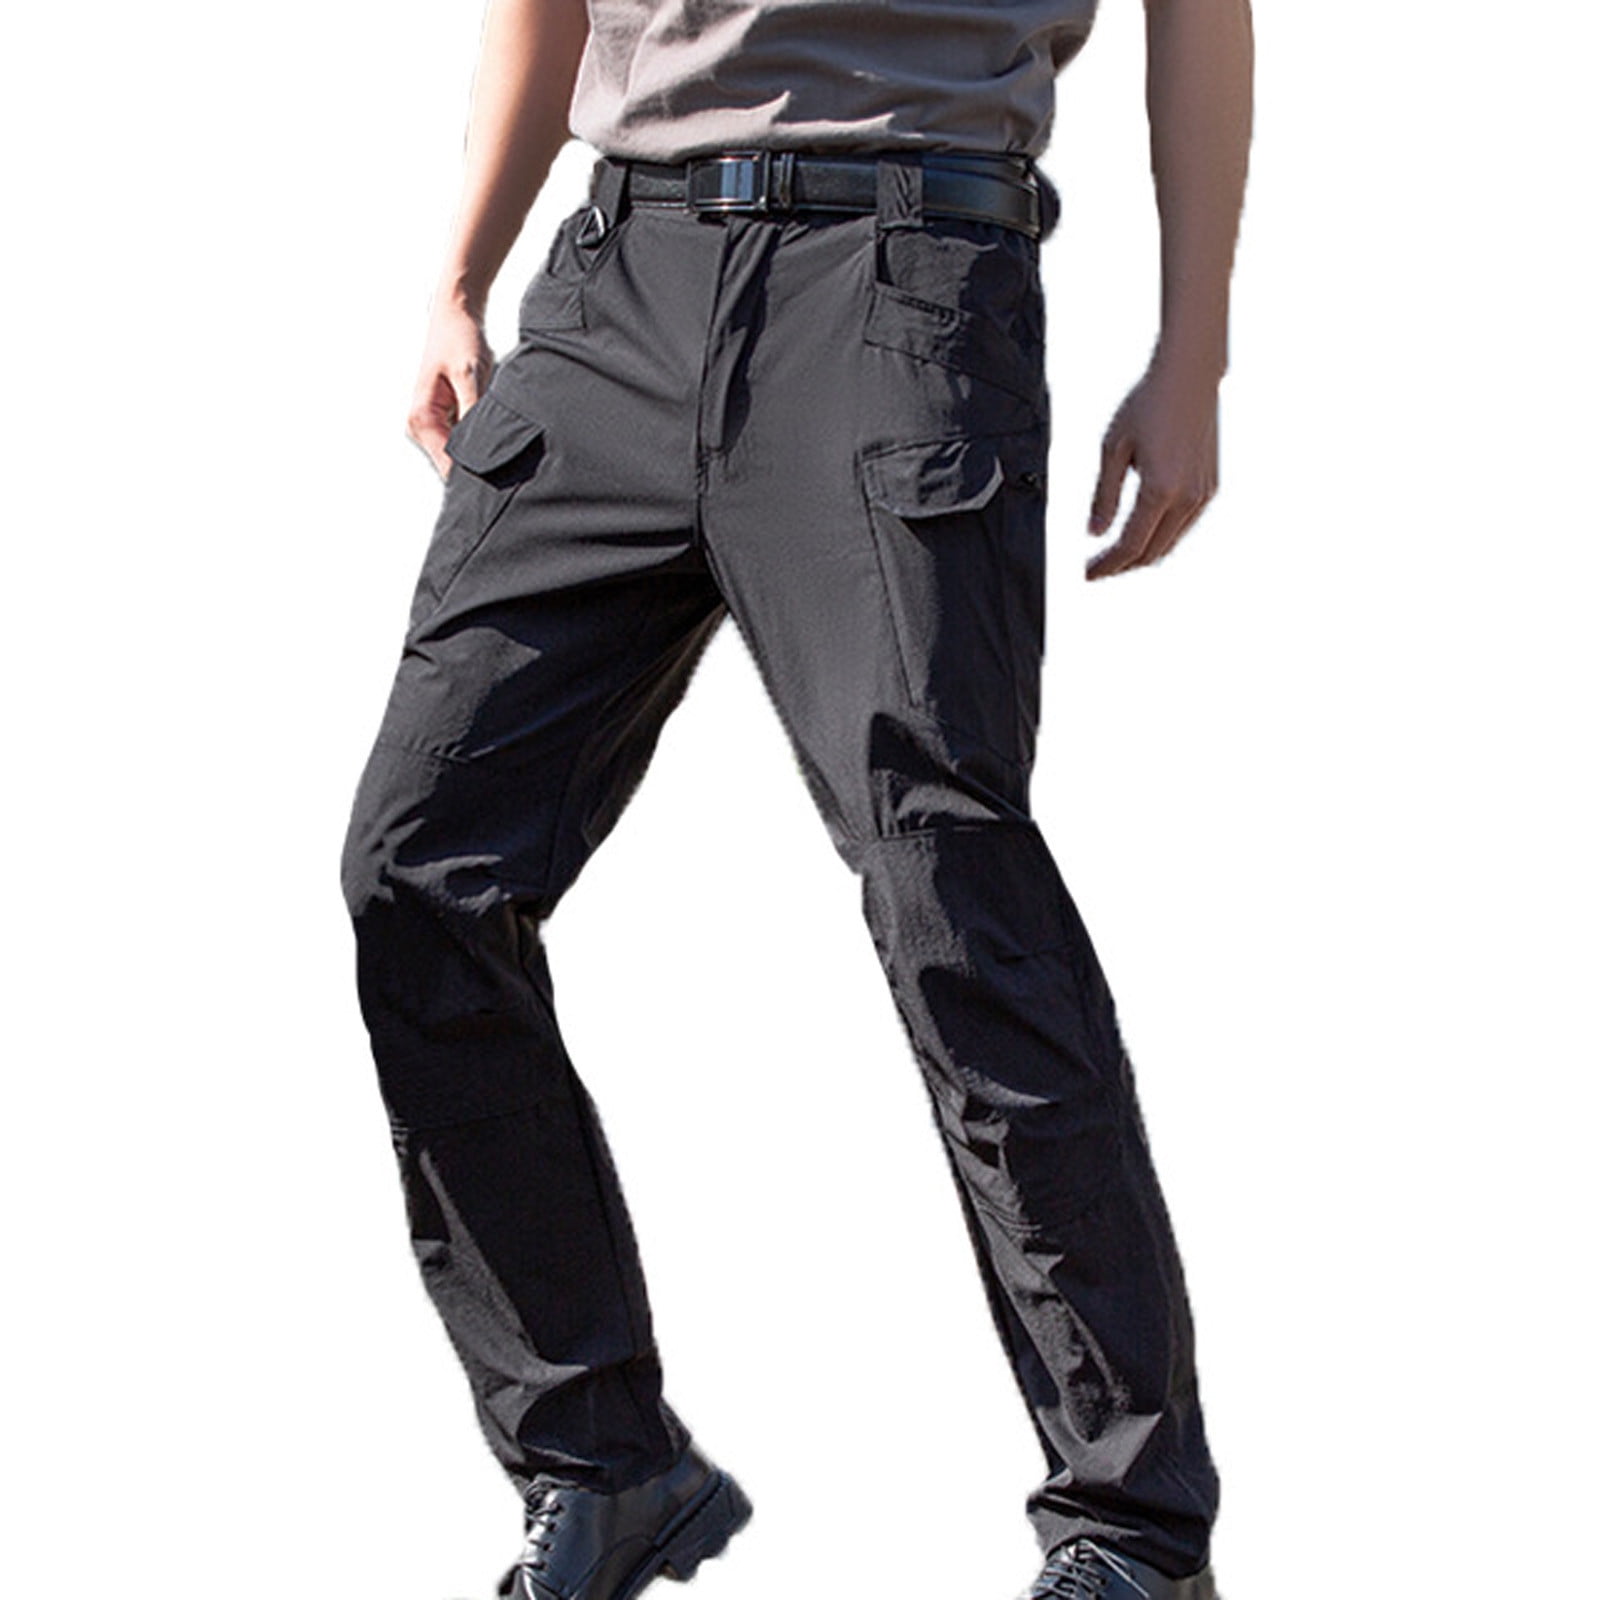 multi-pocket elastic waist bottom trousers jogging men's tactical pants  black overalls at Rs 3611.46, Koramangala, Bengaluru